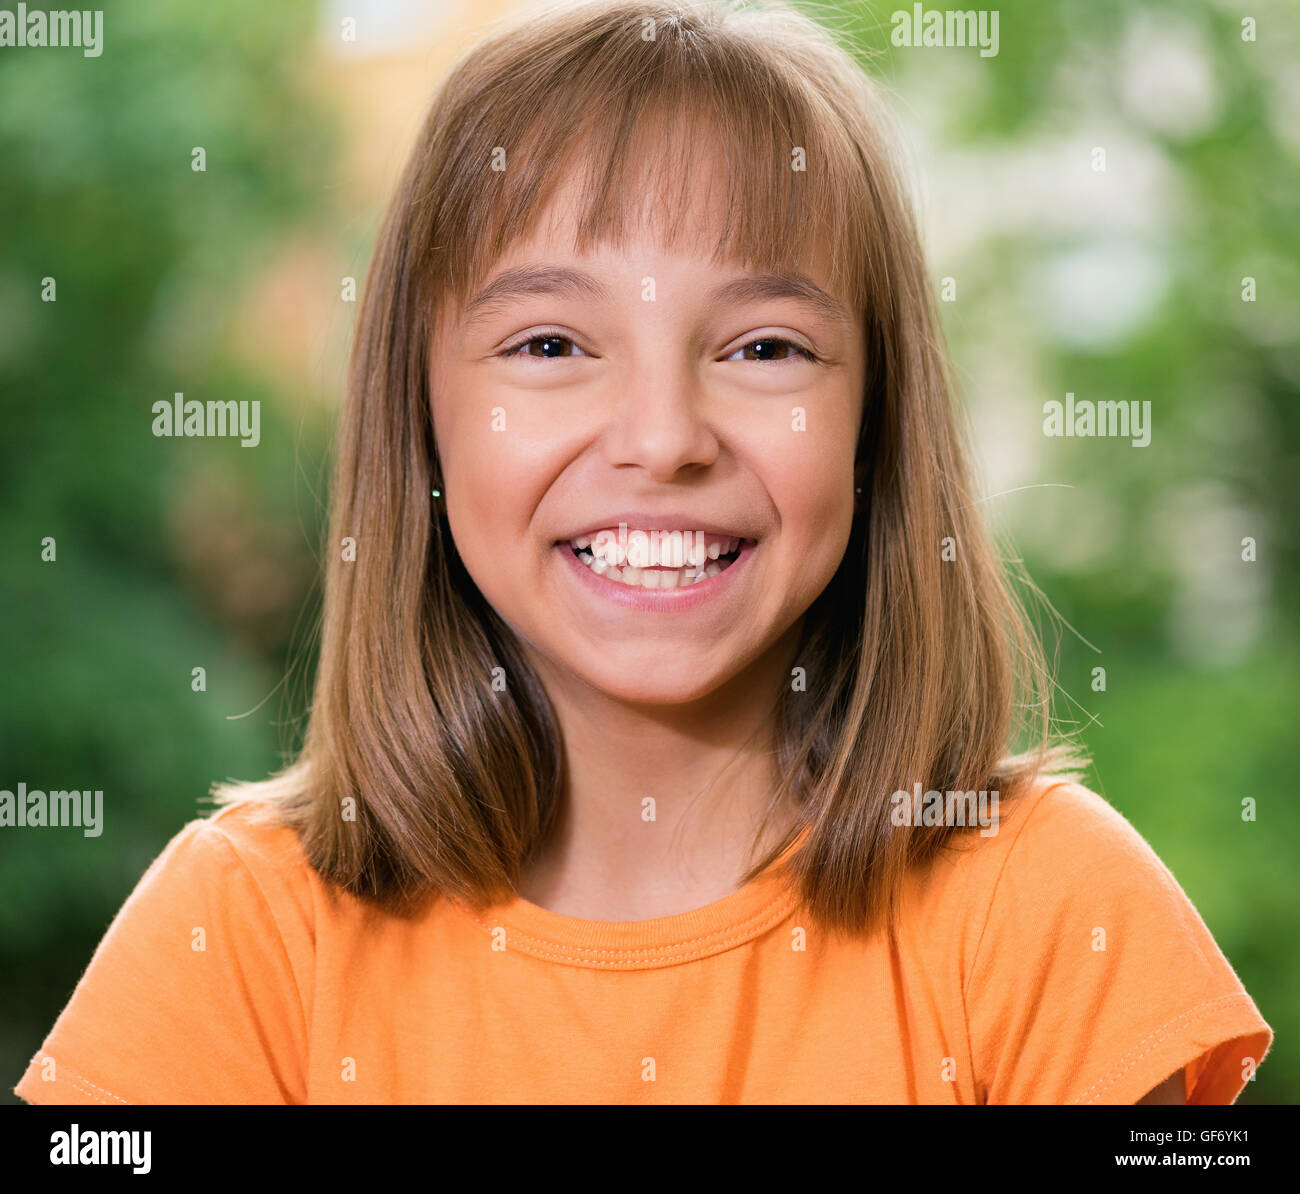 Portrait of smiling girl Stock Photo